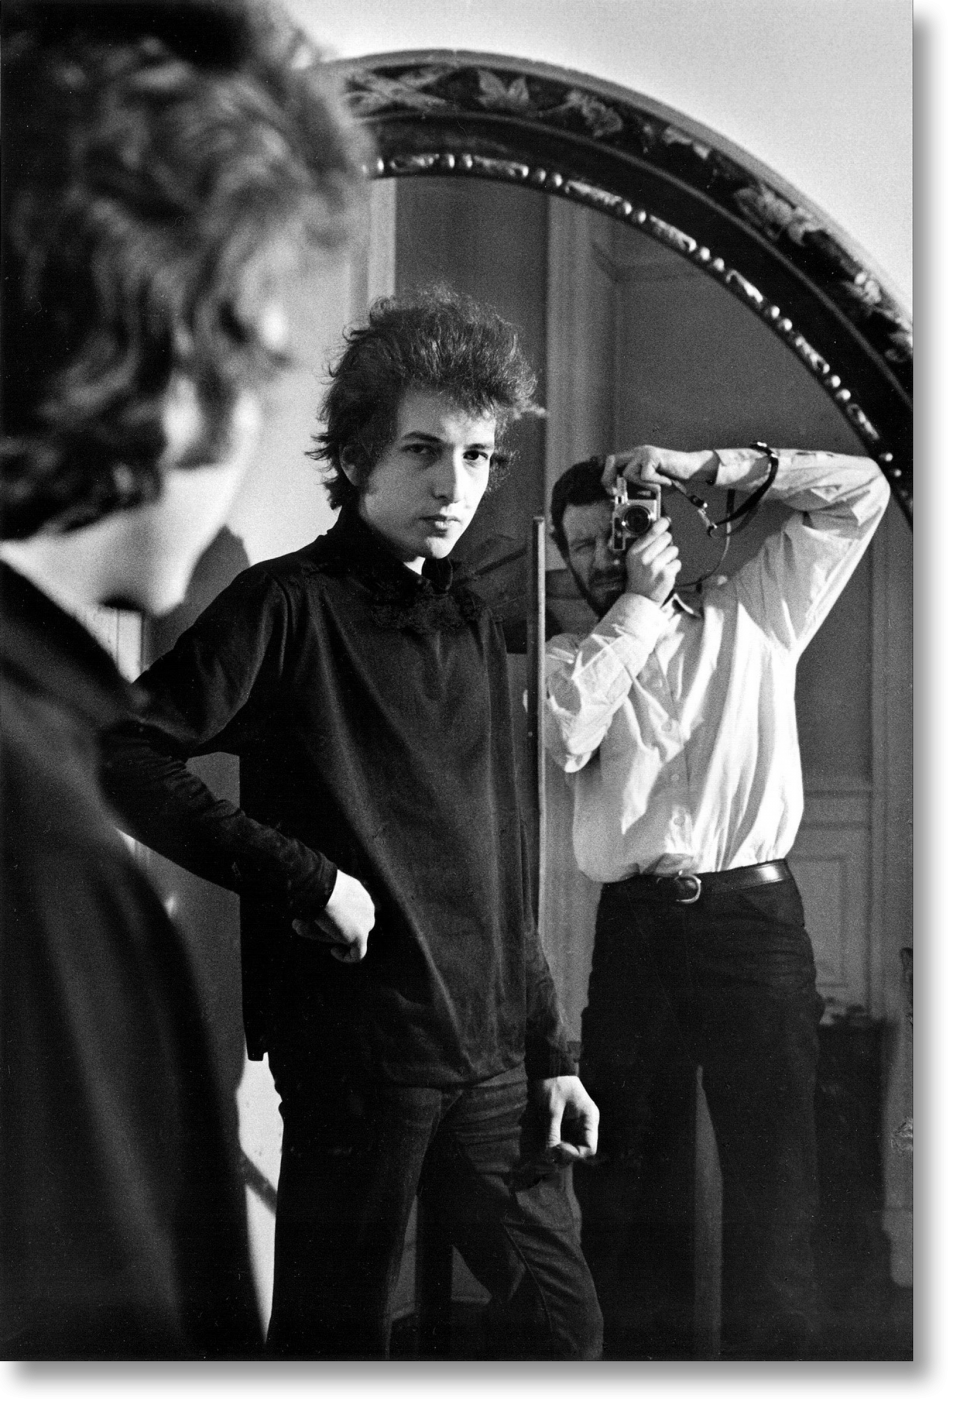 Daniel Kramer, Bob Dylan & Daniel Kramer in Mirror, 1965